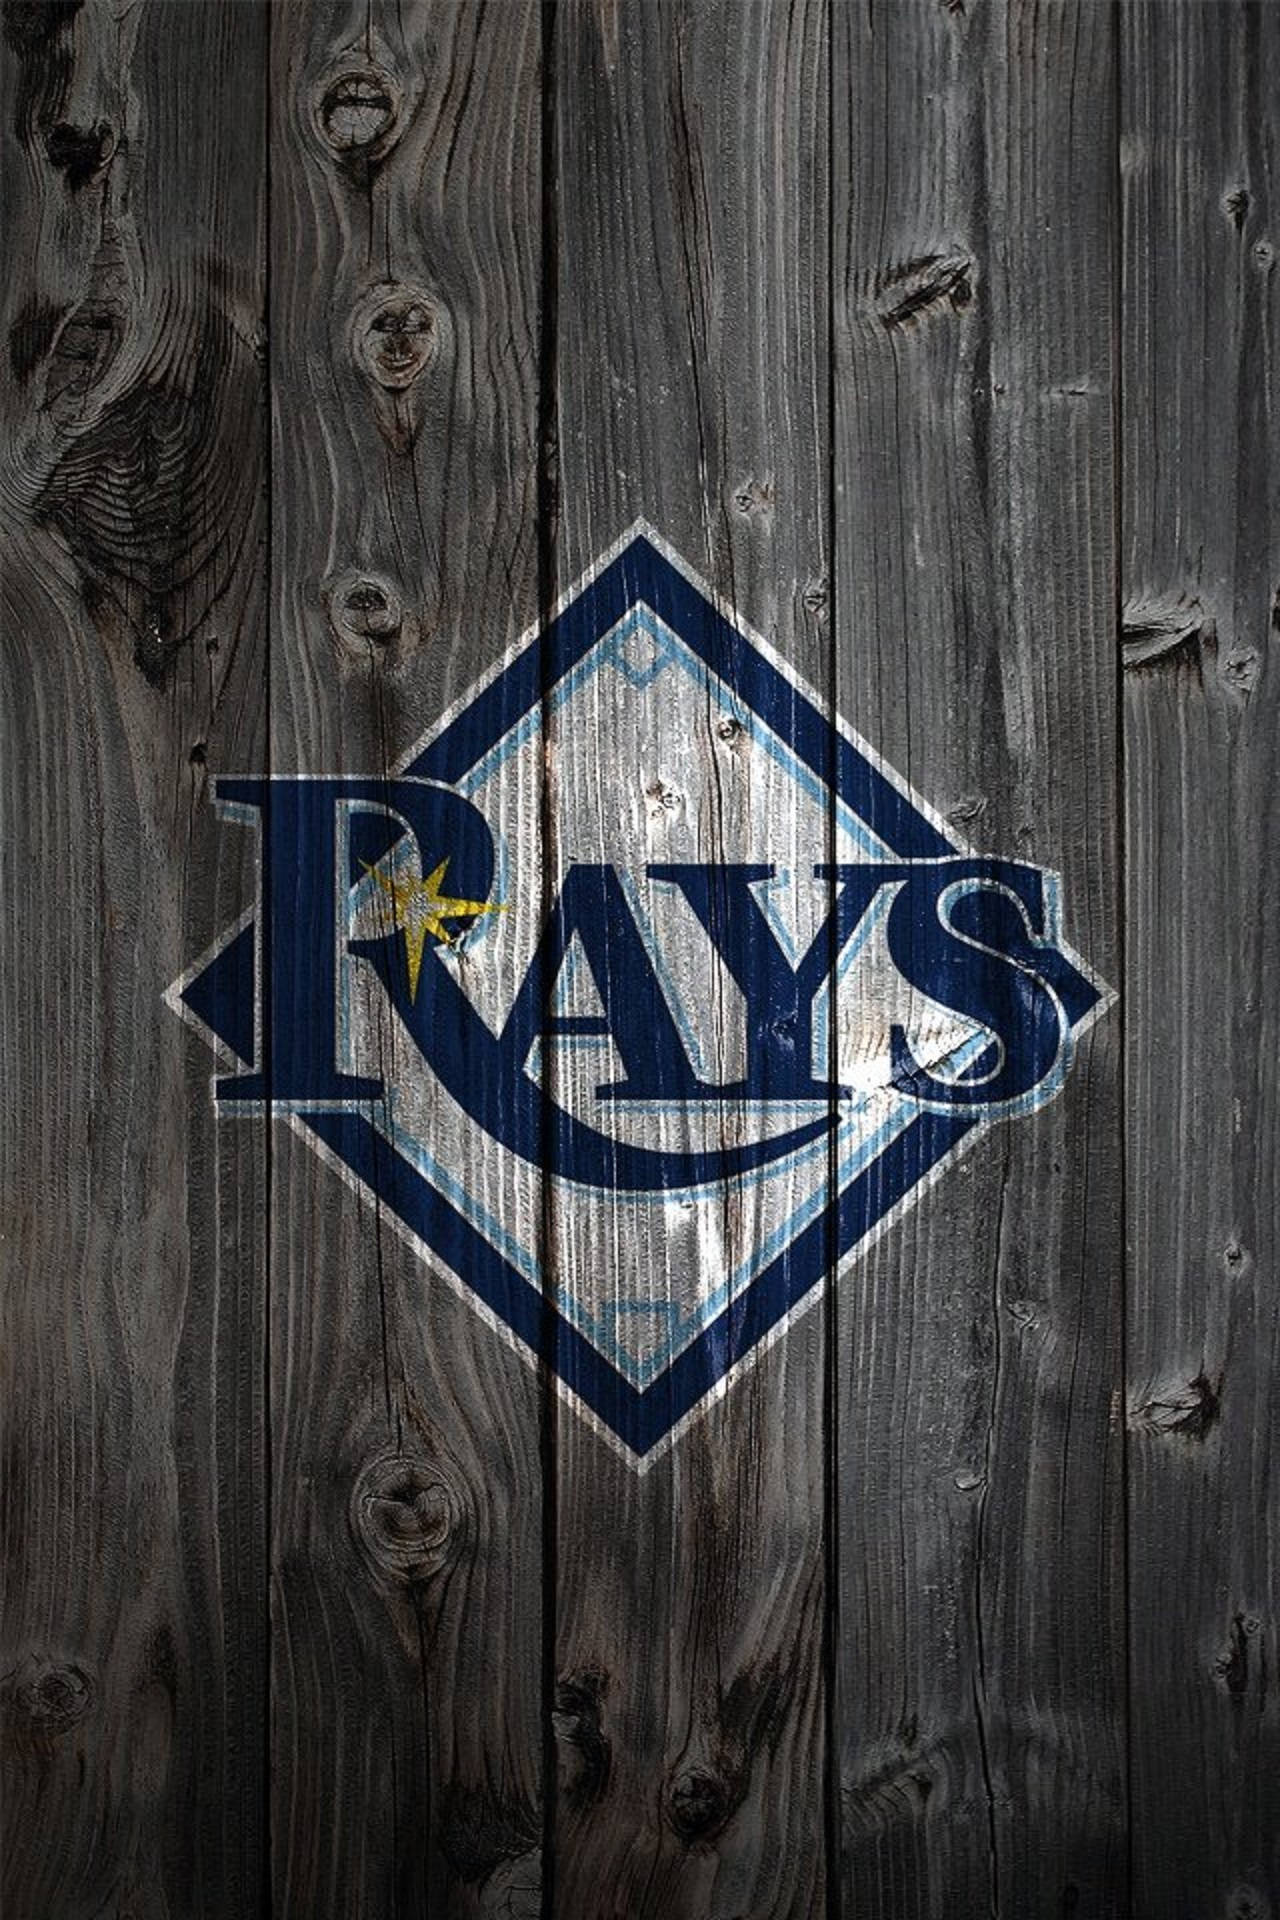 Tampa Bay Rays Emblem On Wood